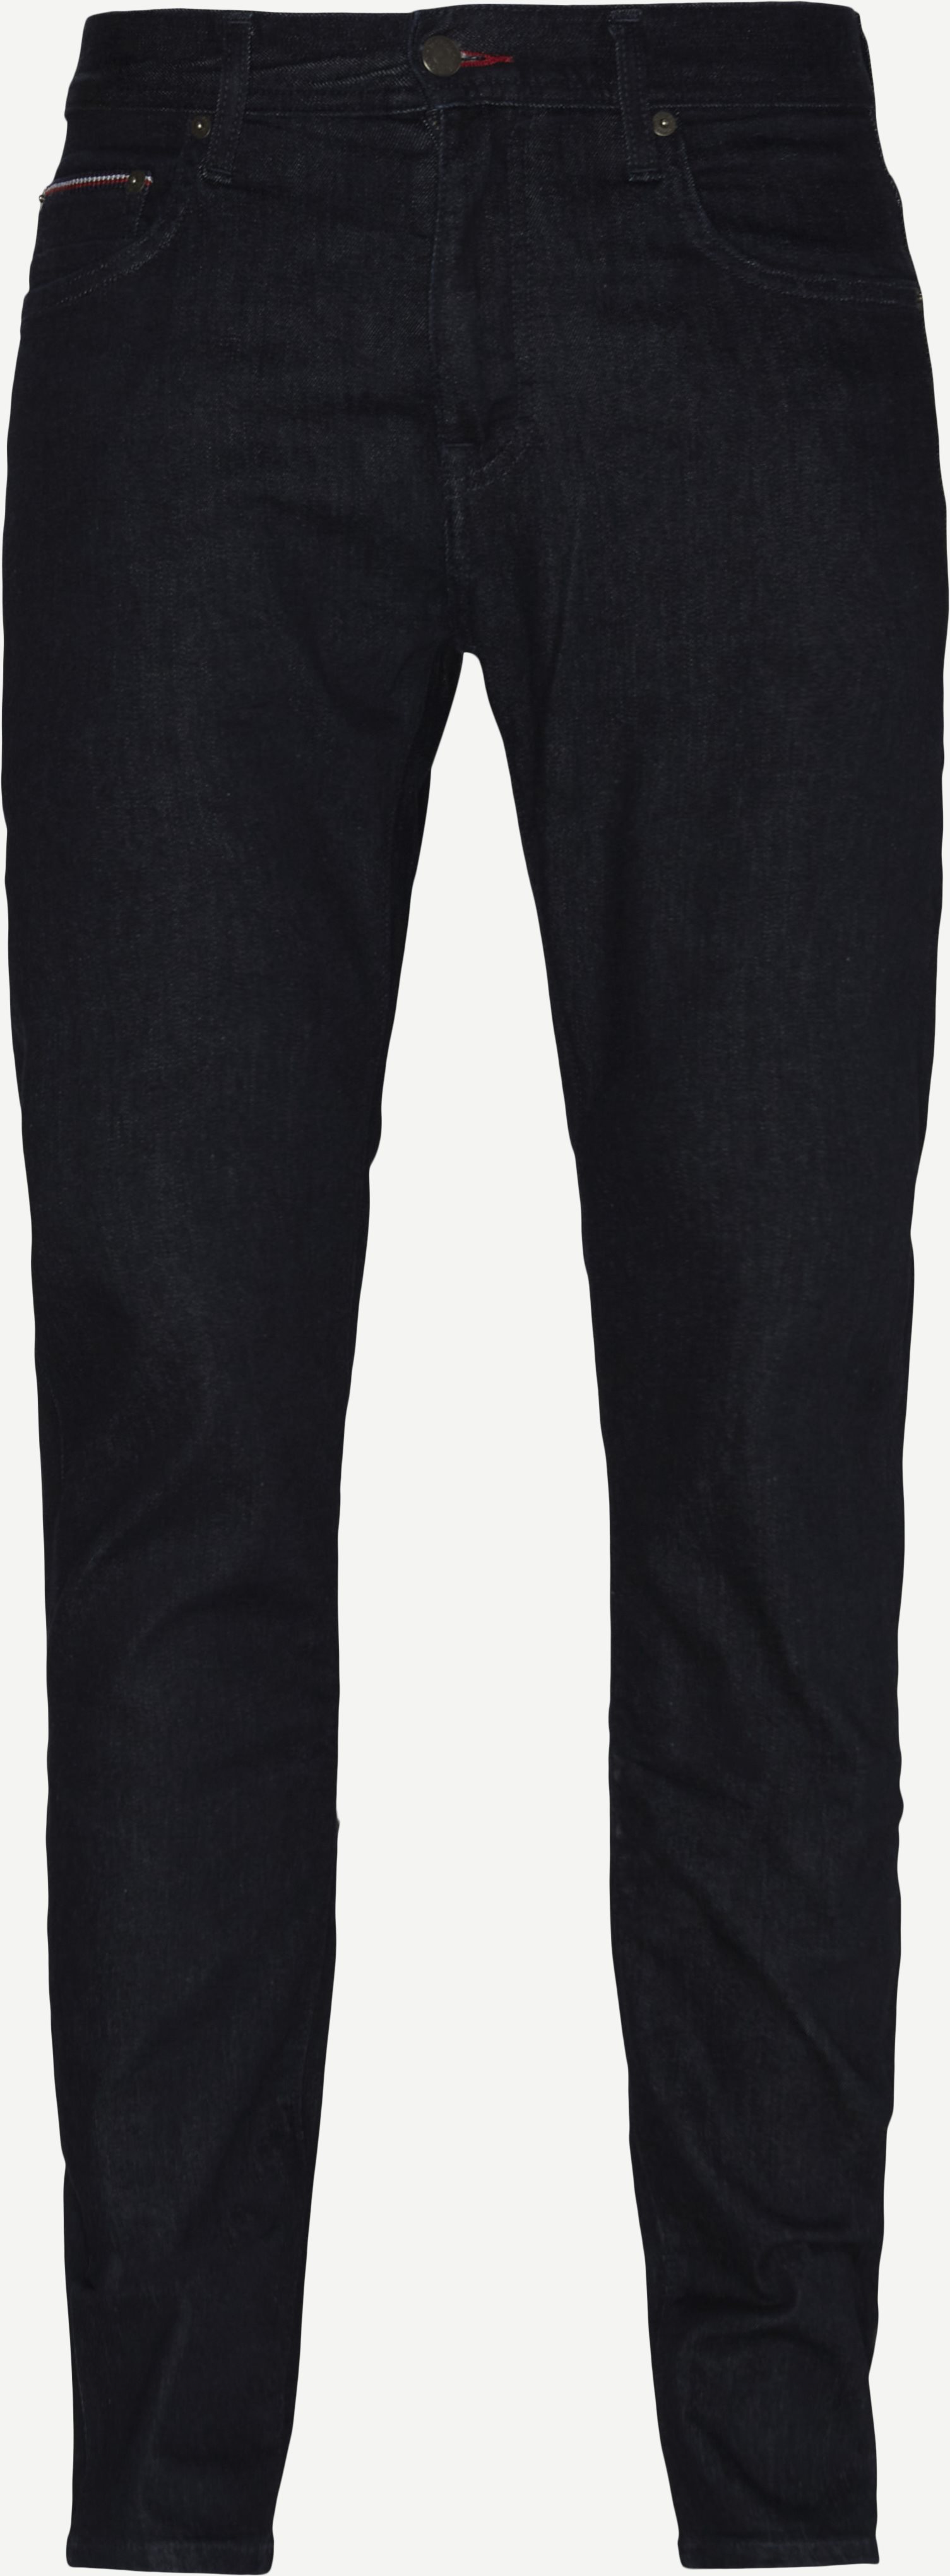 15600 Bleecker Ohio Jeans - Jeans - Slim fit - Denim